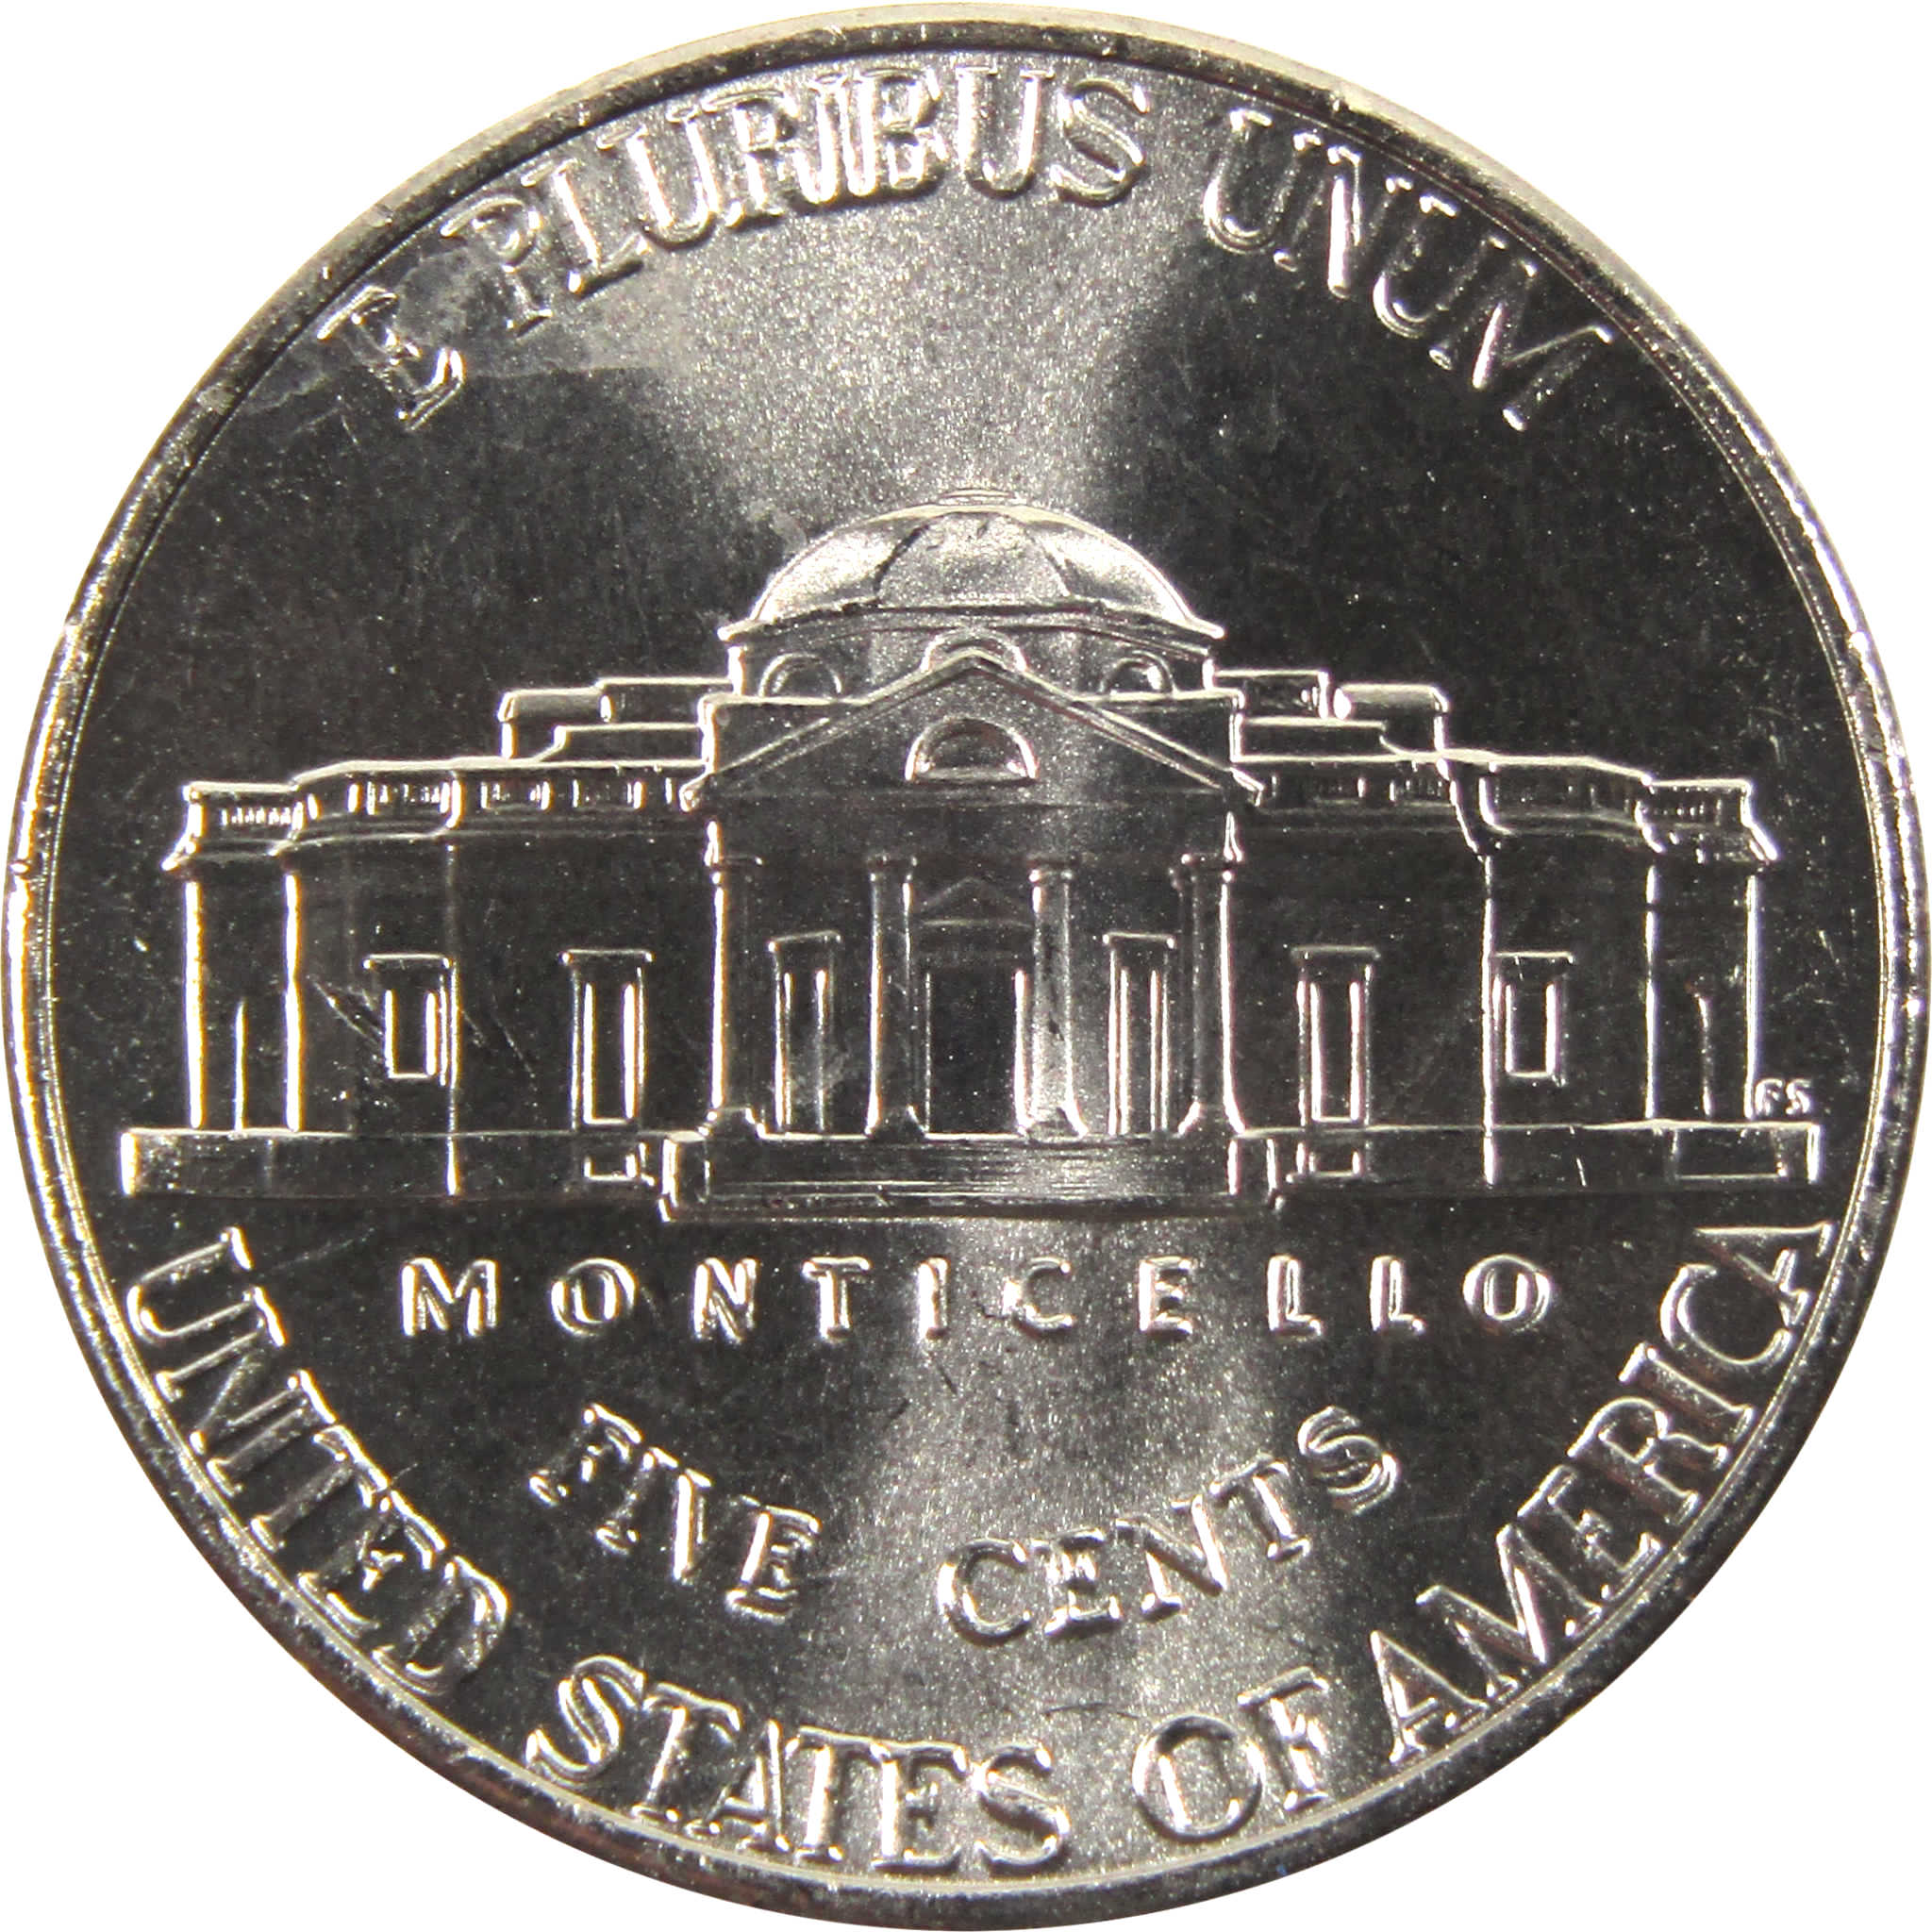 2022 D Jefferson Nickel BU Uncirculated 5c Coin